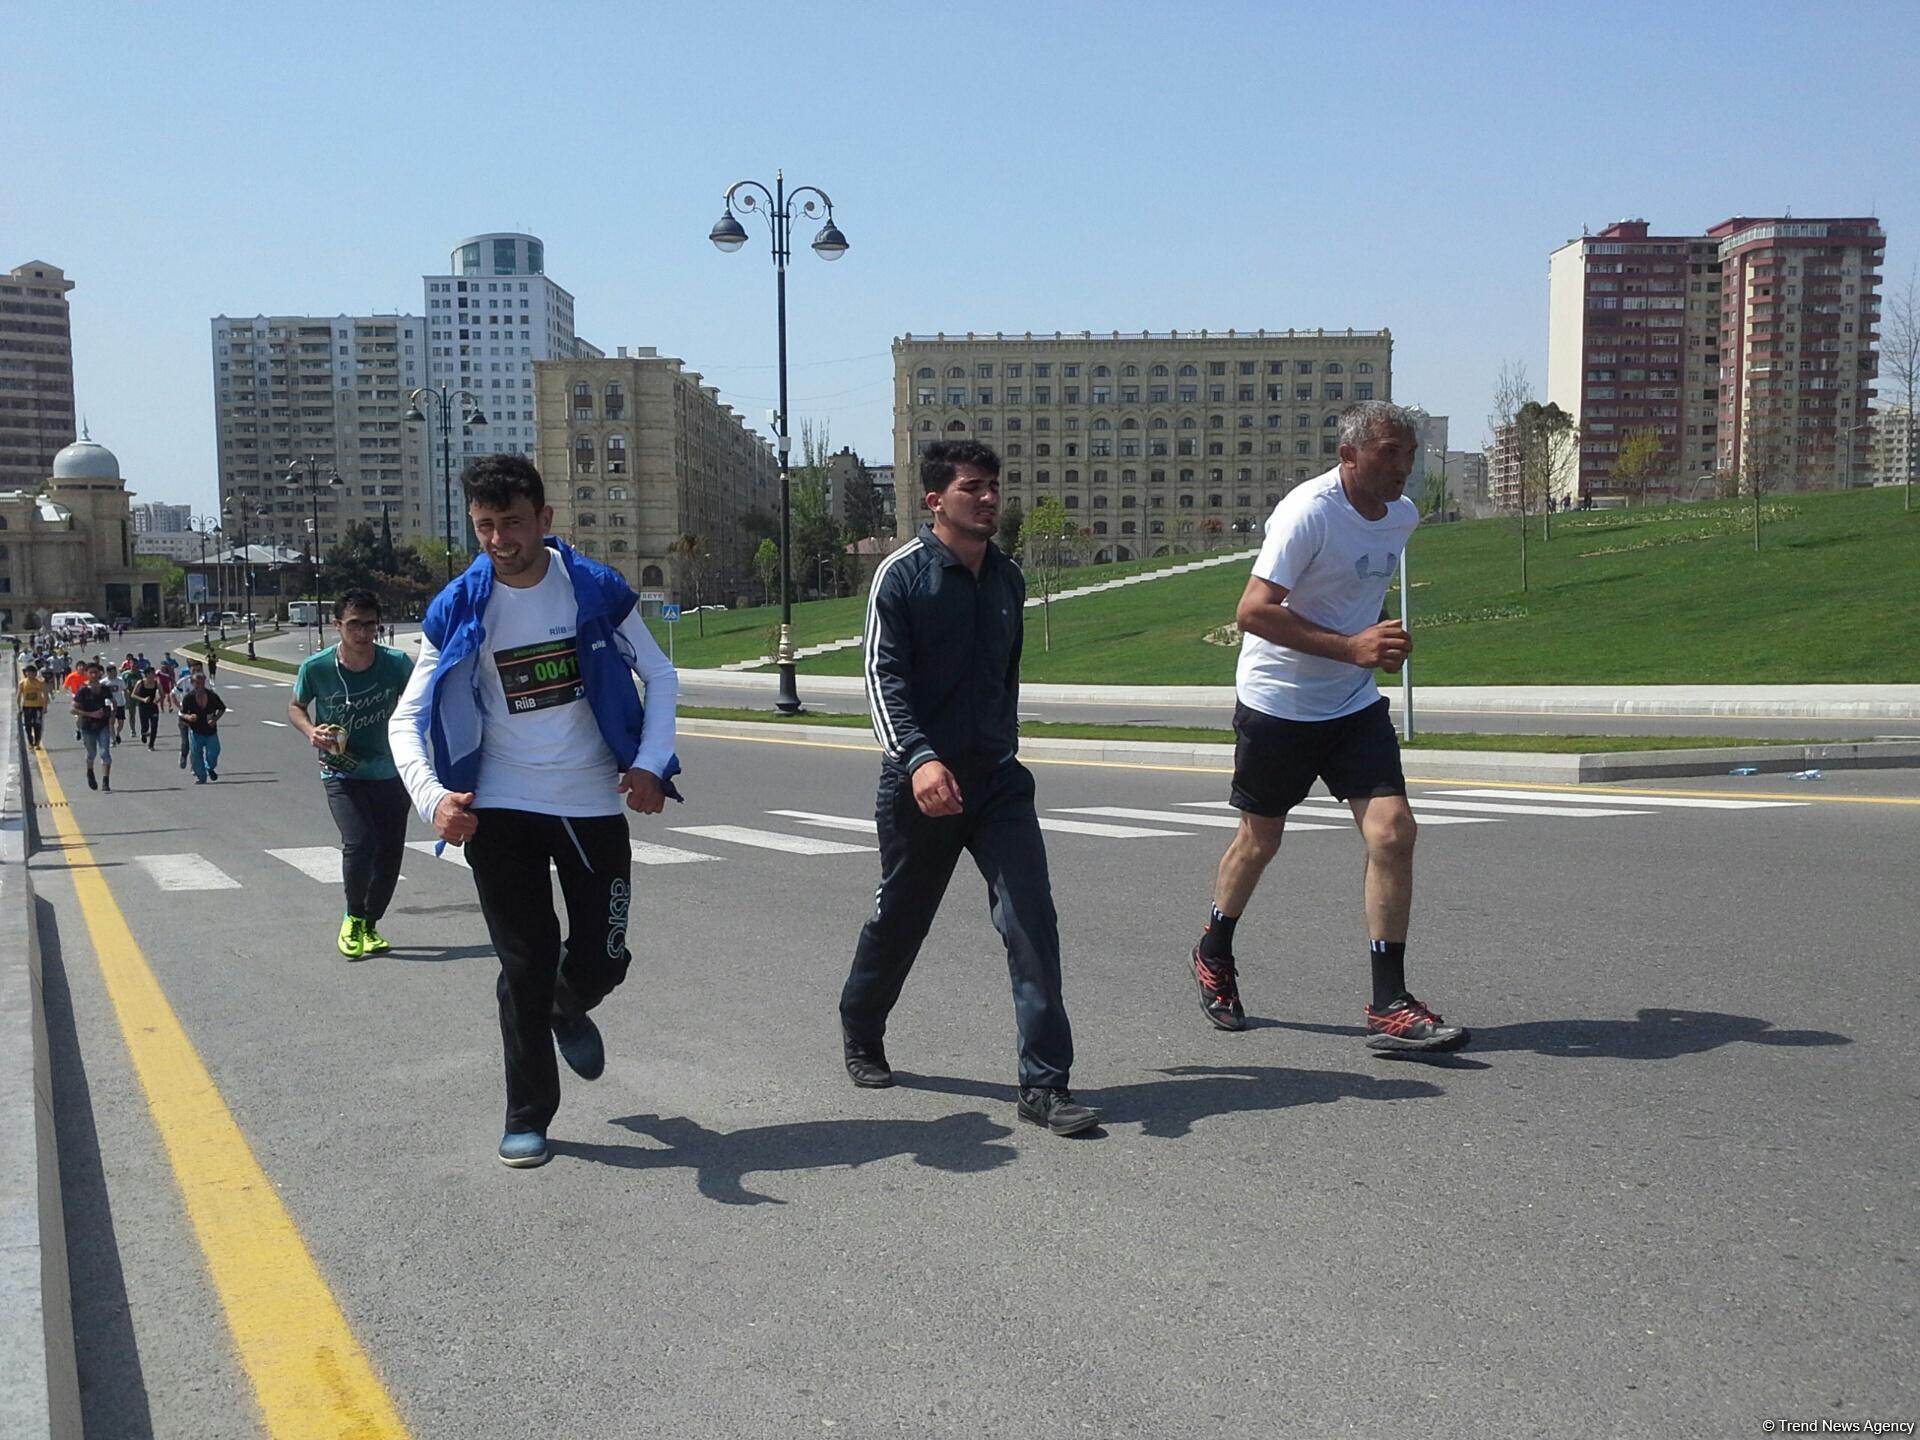 Baku Marathon 2017 (PHOTO)